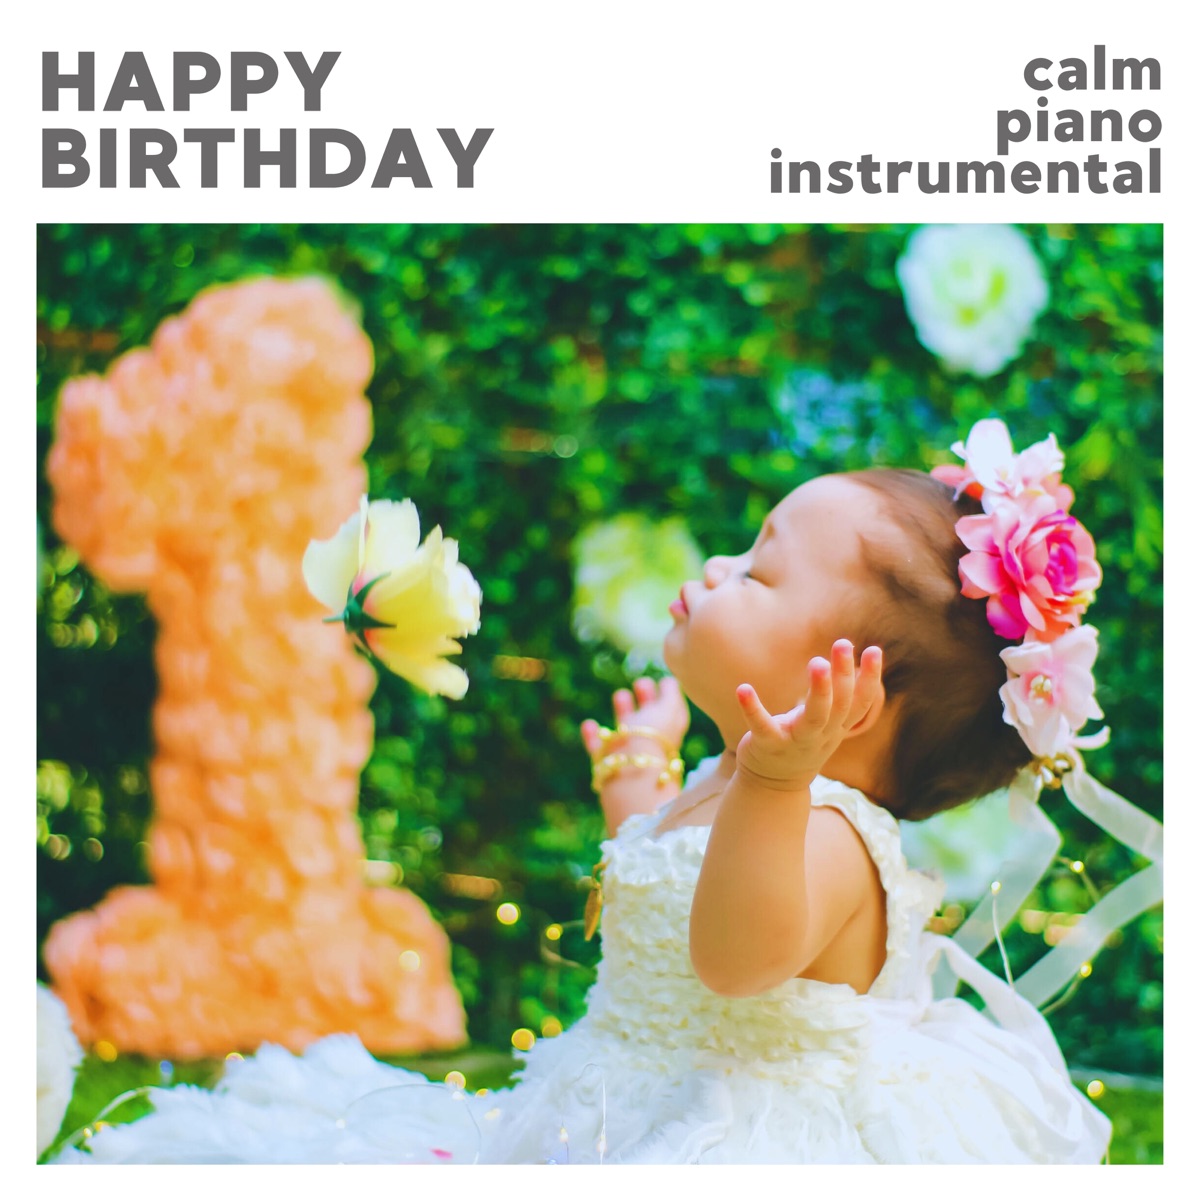 Happy Birthday Calm Piano Instrumental